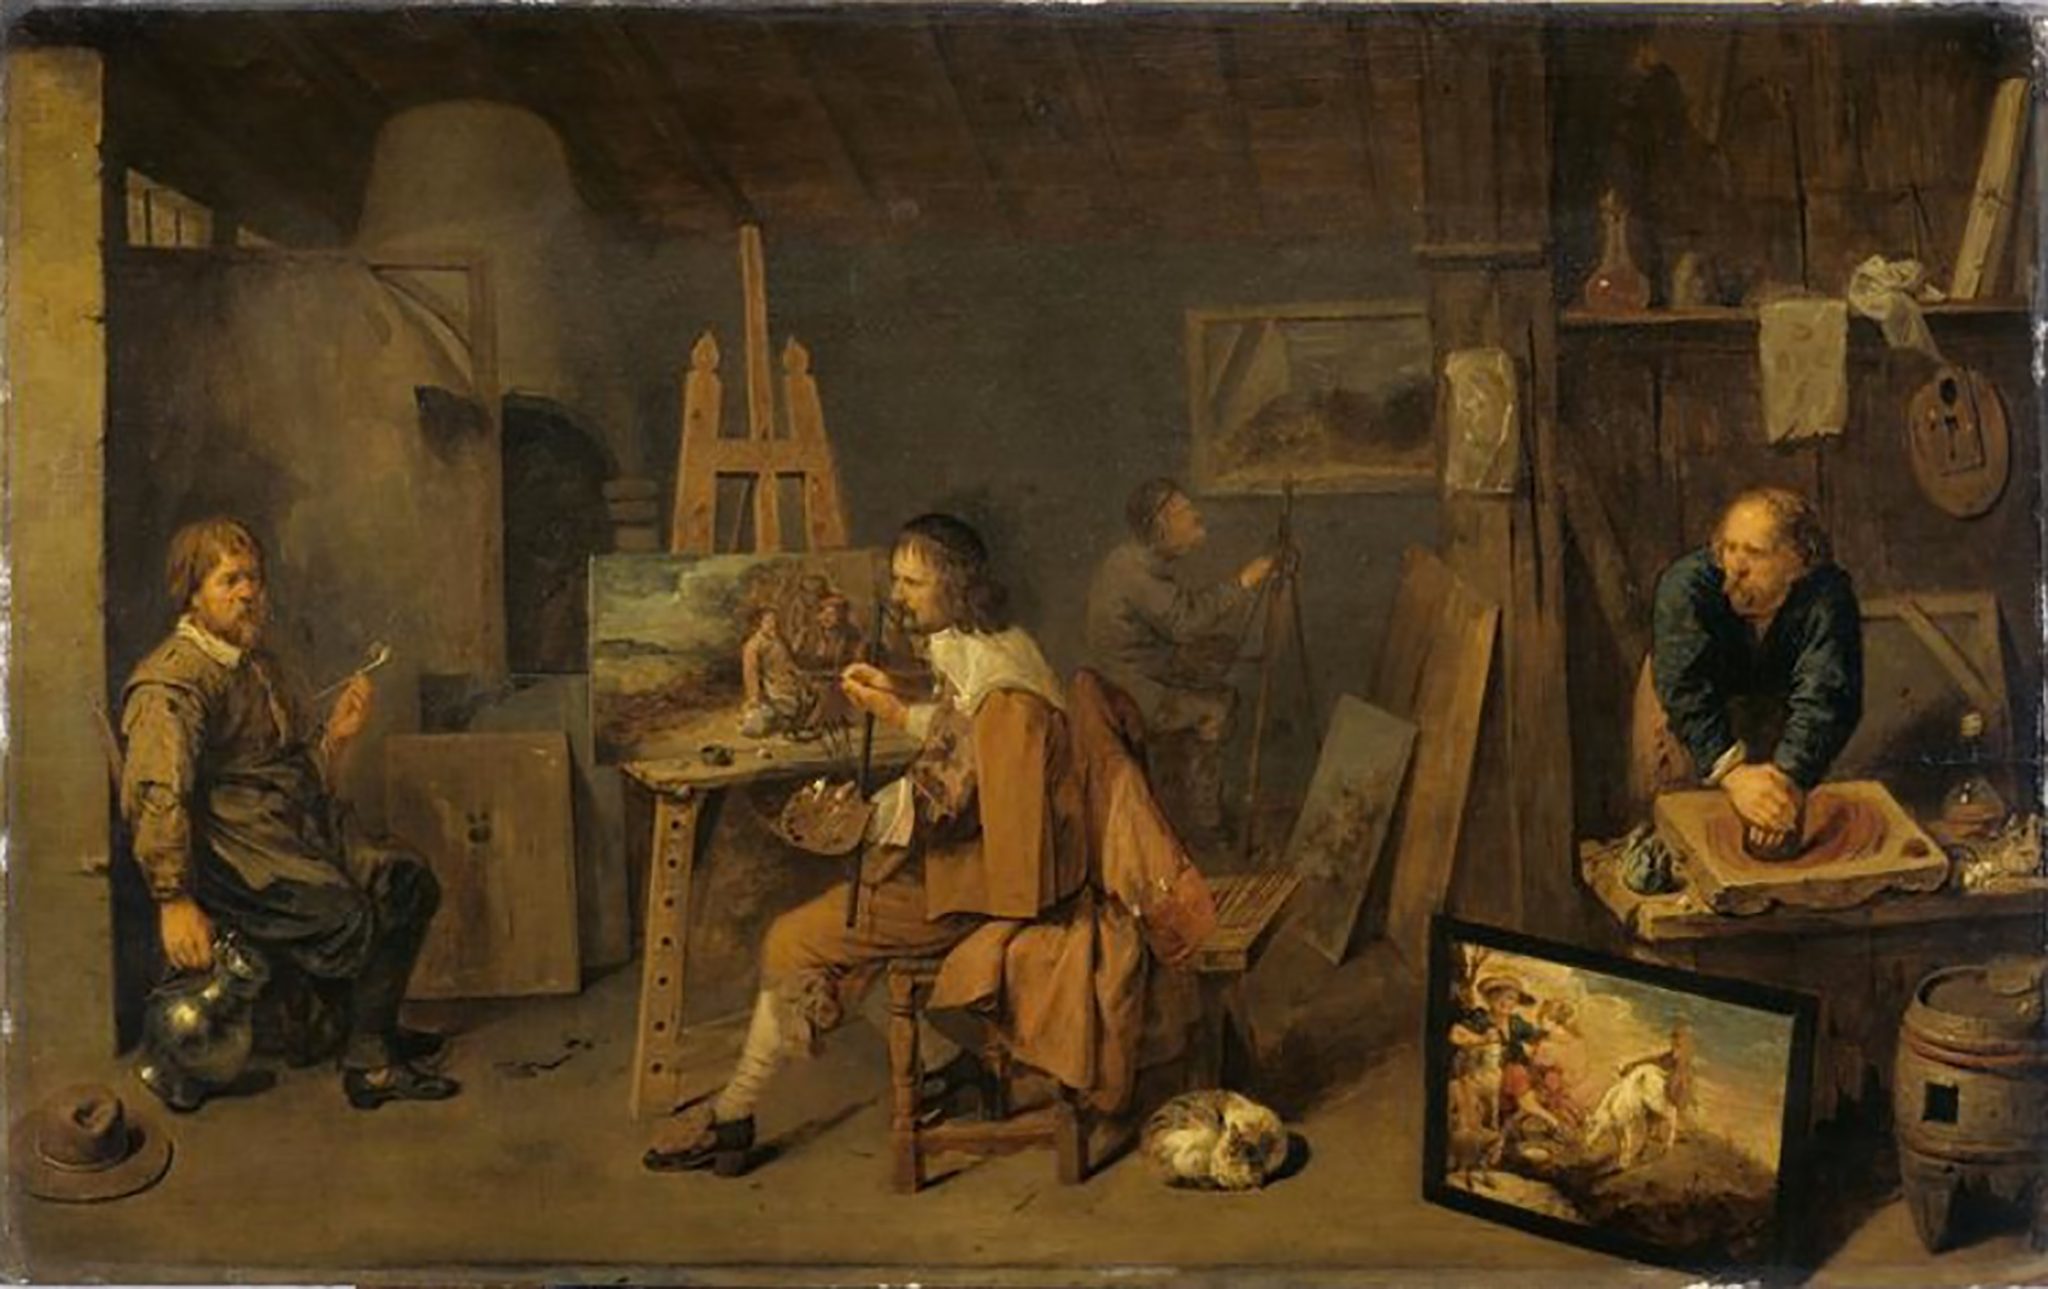 Economic Histories of Netherlandish Art - Journal of Historians of